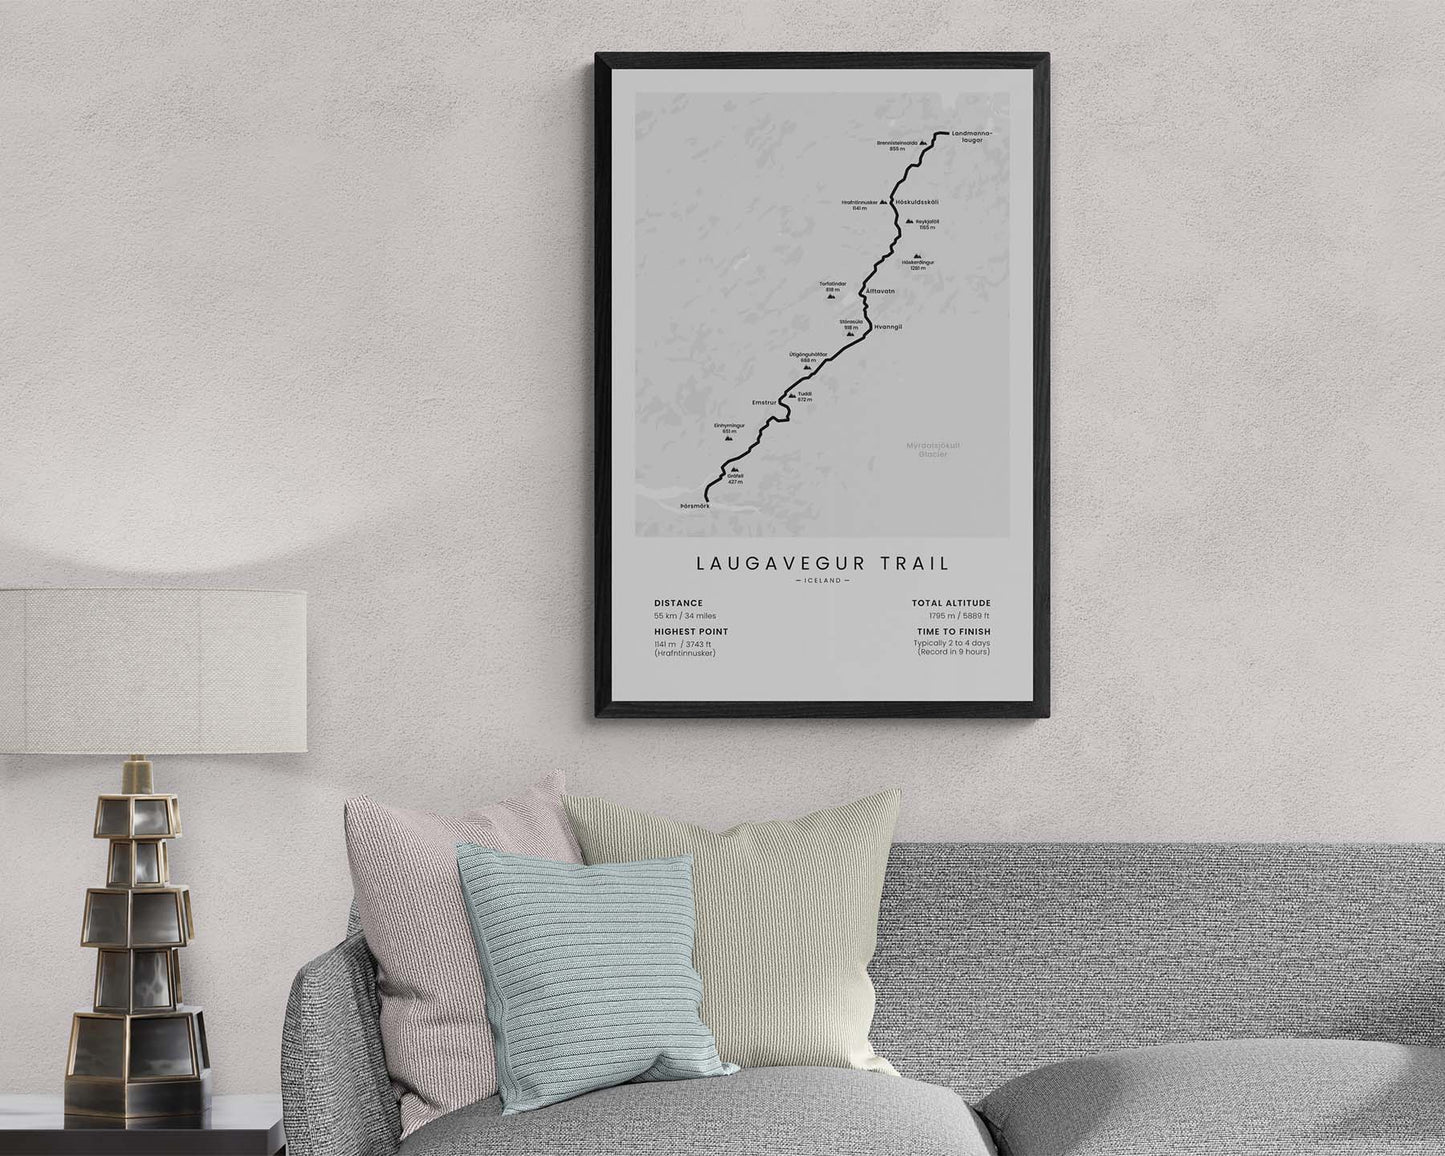 Laugavegur Trail in Thorsmork (Iceland) Trail Map Art in Minimal Room Decor